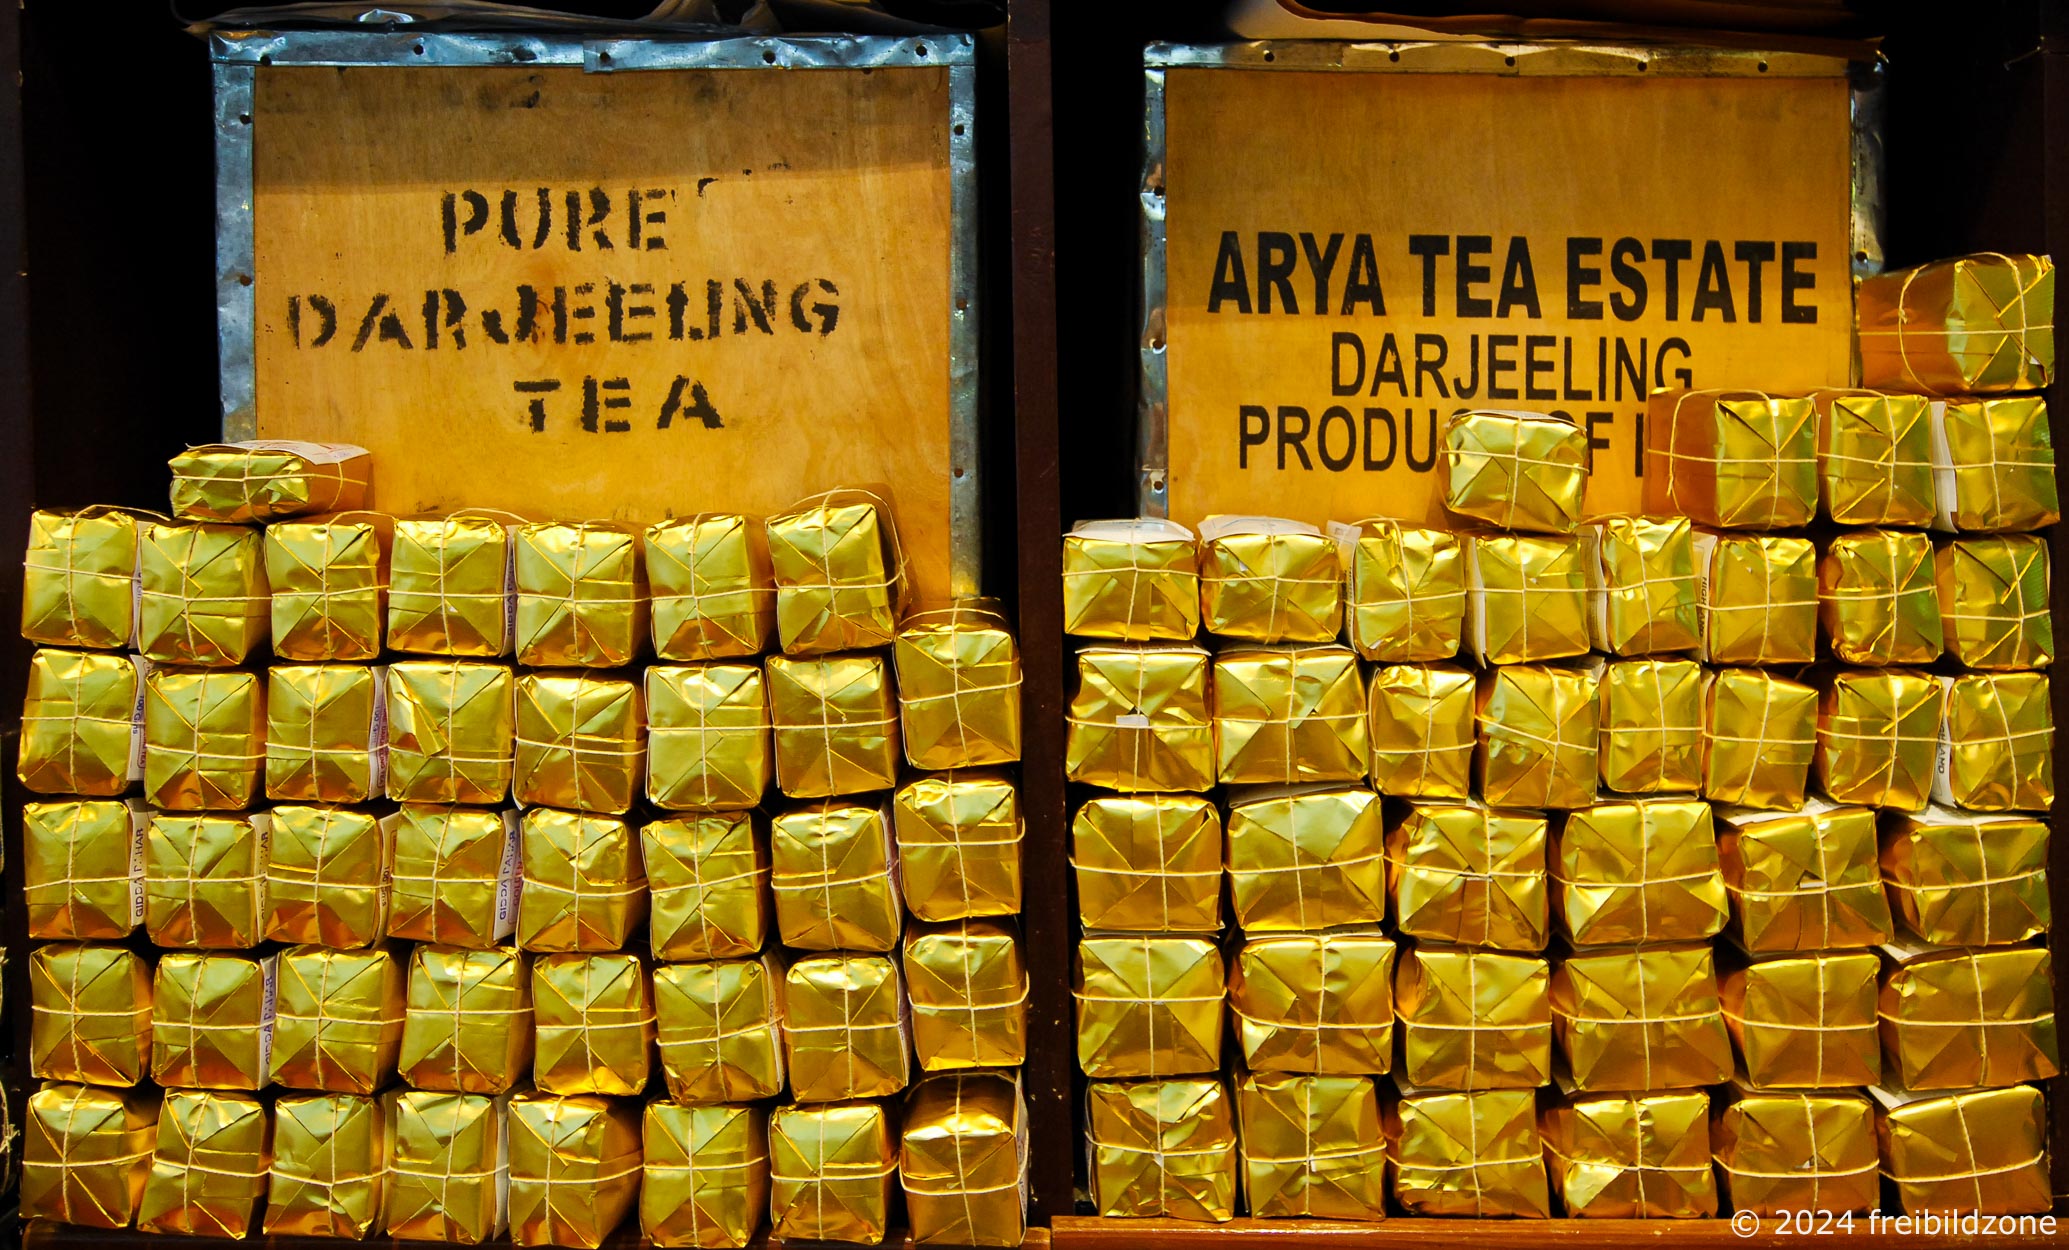 Darjeeling Tea, India